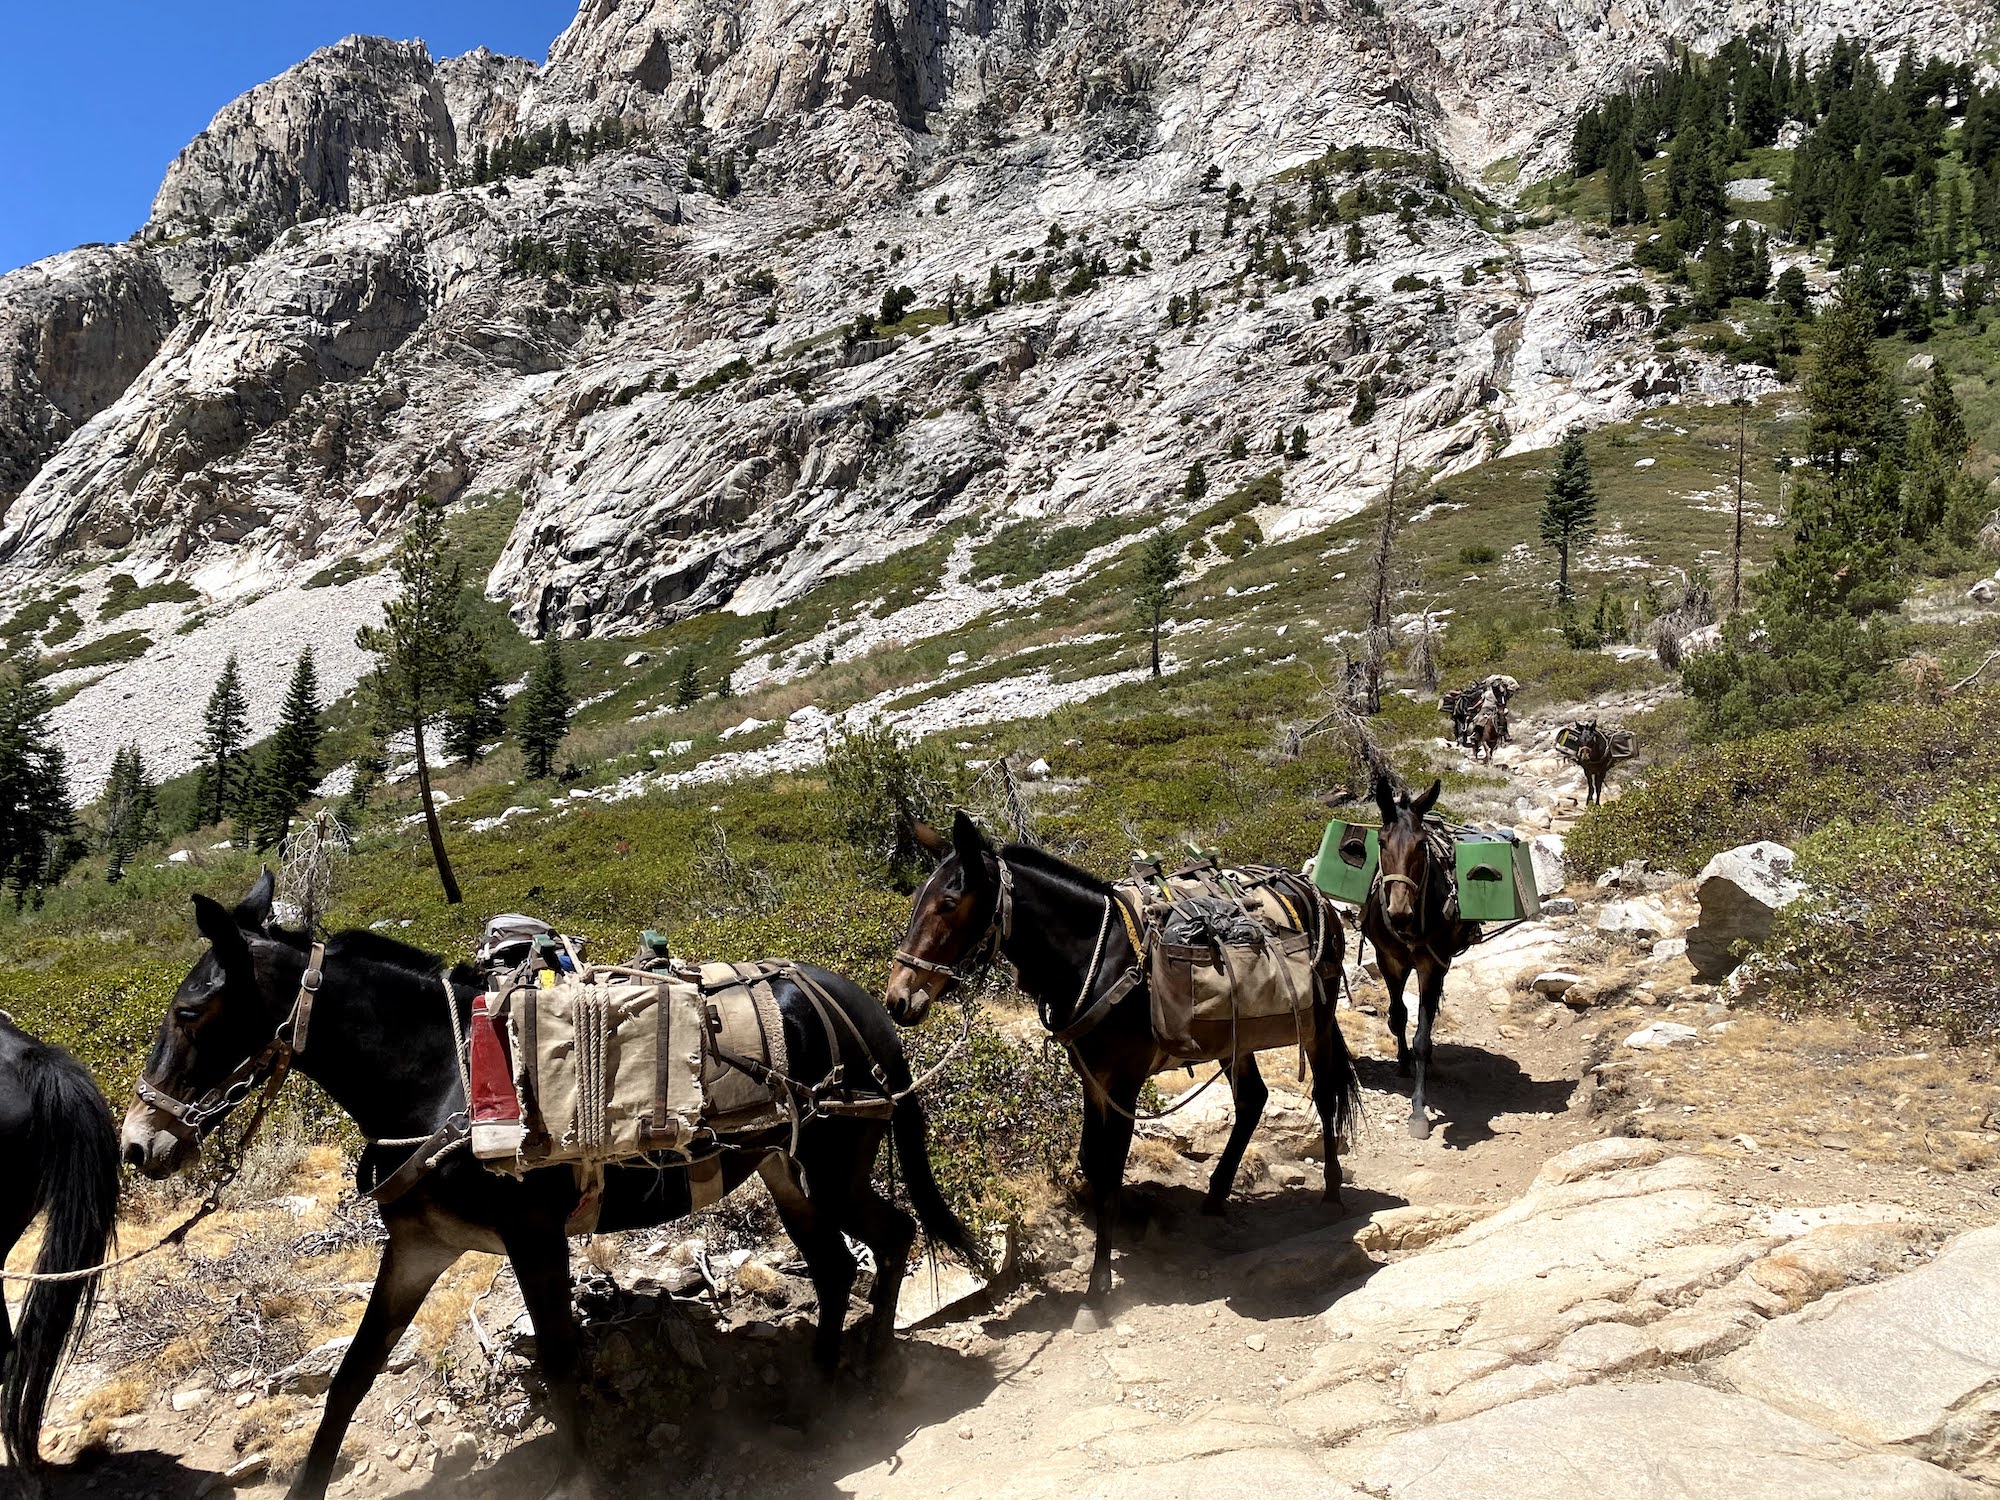 A mule train coming down a mountain